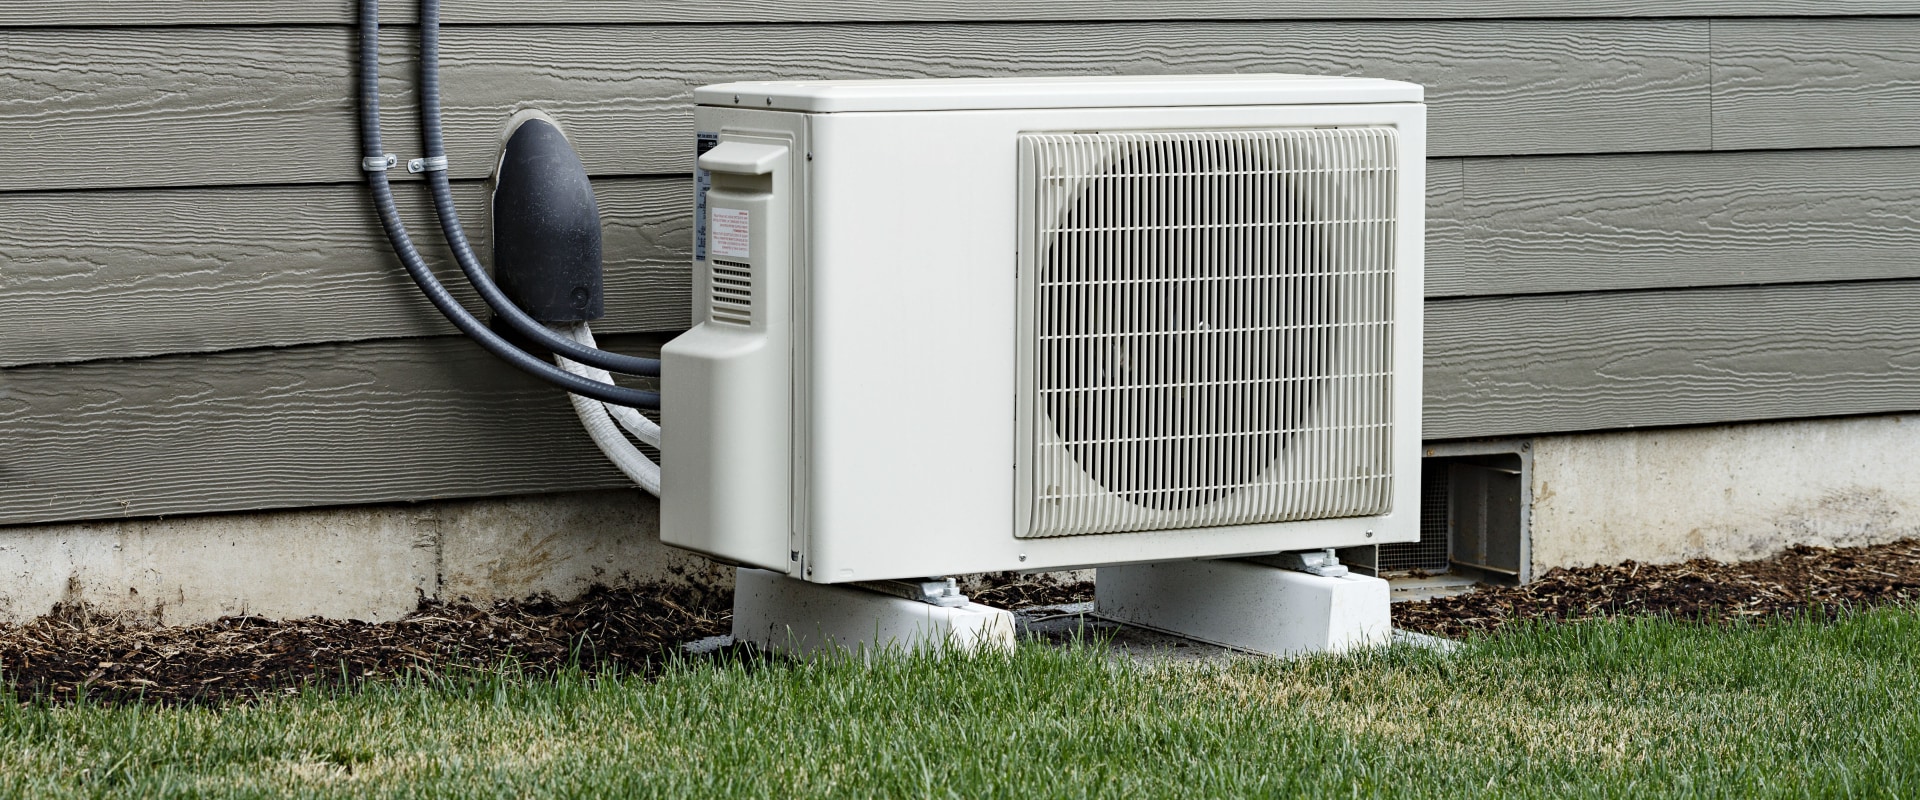 Do mini split air conditioners dehumidify?